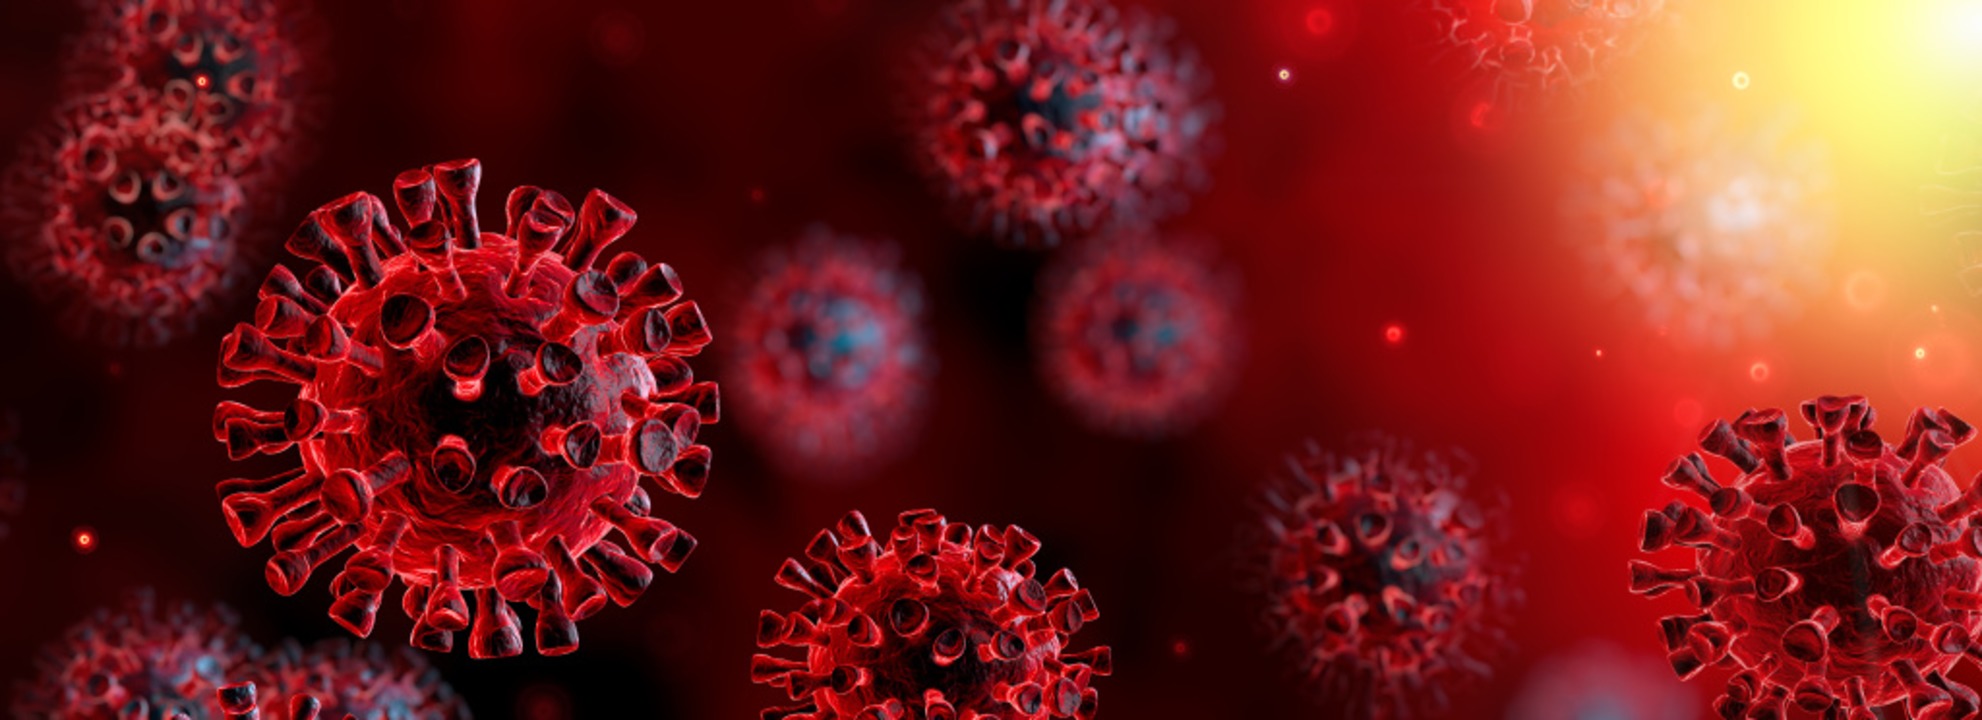 Das Coronavirus hält die Welt in Atem.  | Foto: Romolo Tavani  (stock.adobe.com)